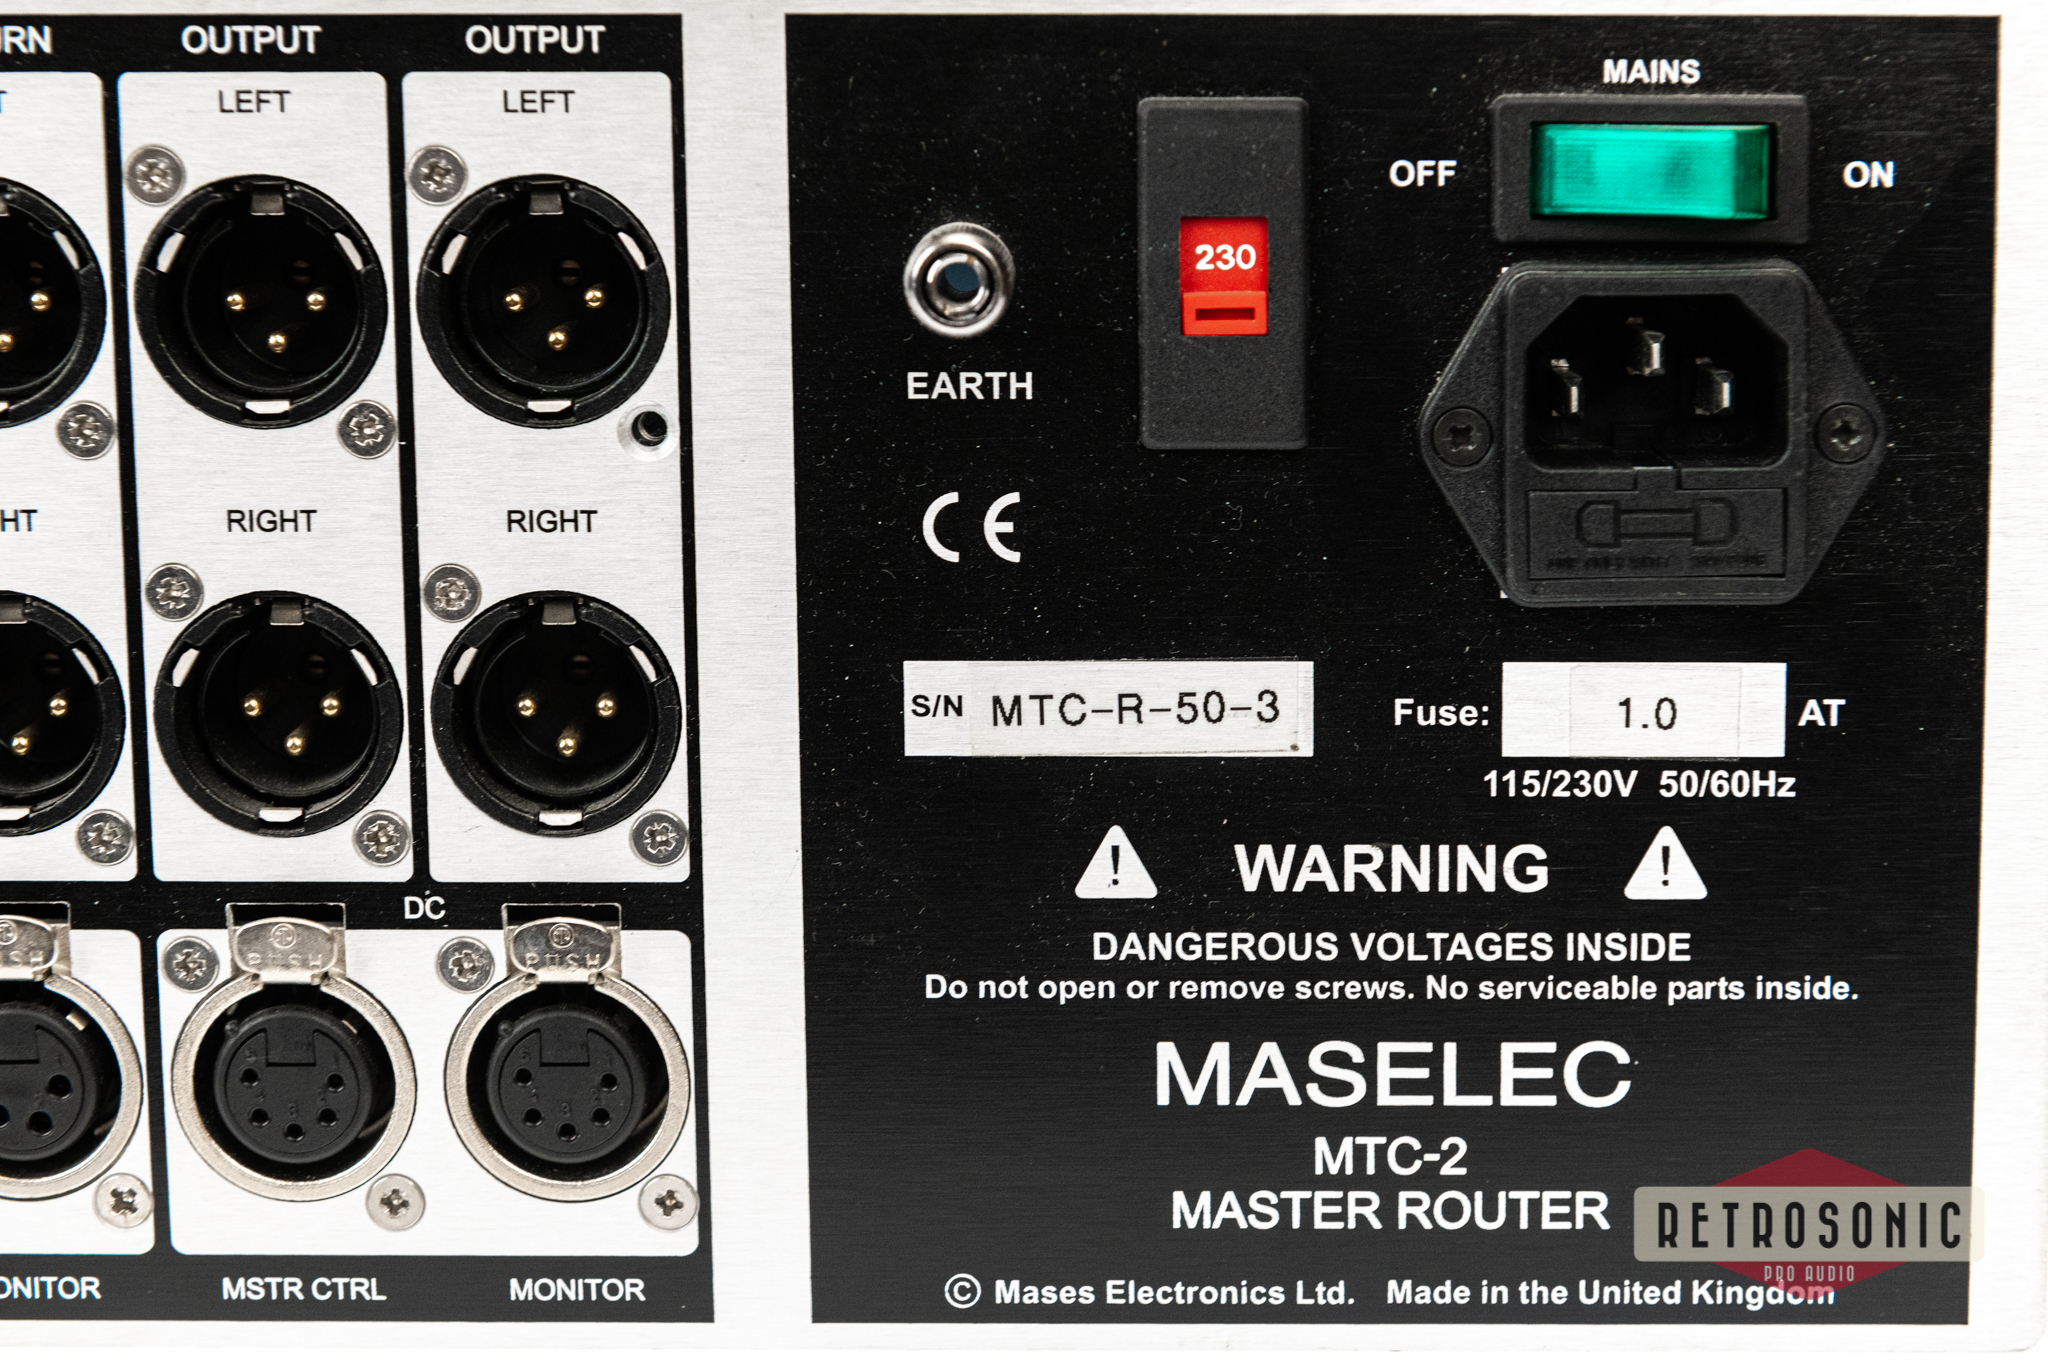 Maselec MTC-2 Master Router